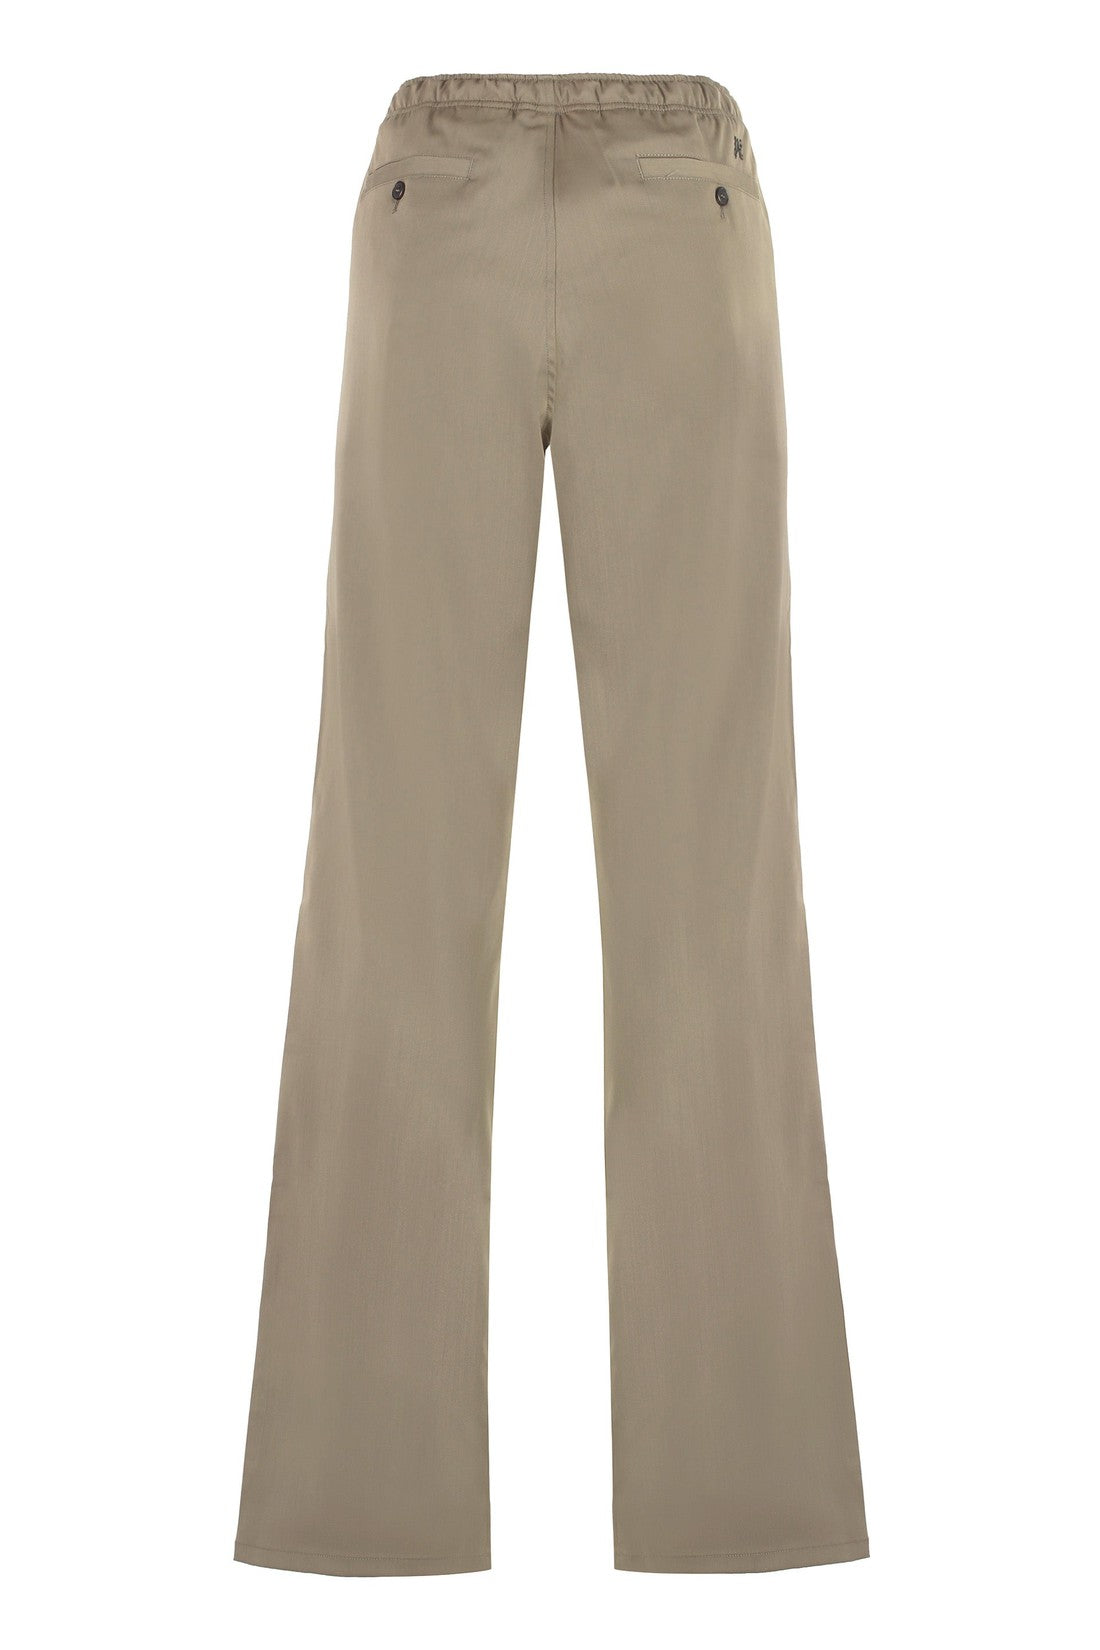 Palm Angels-OUTLET-SALE-Wool blend trousers-ARCHIVIST